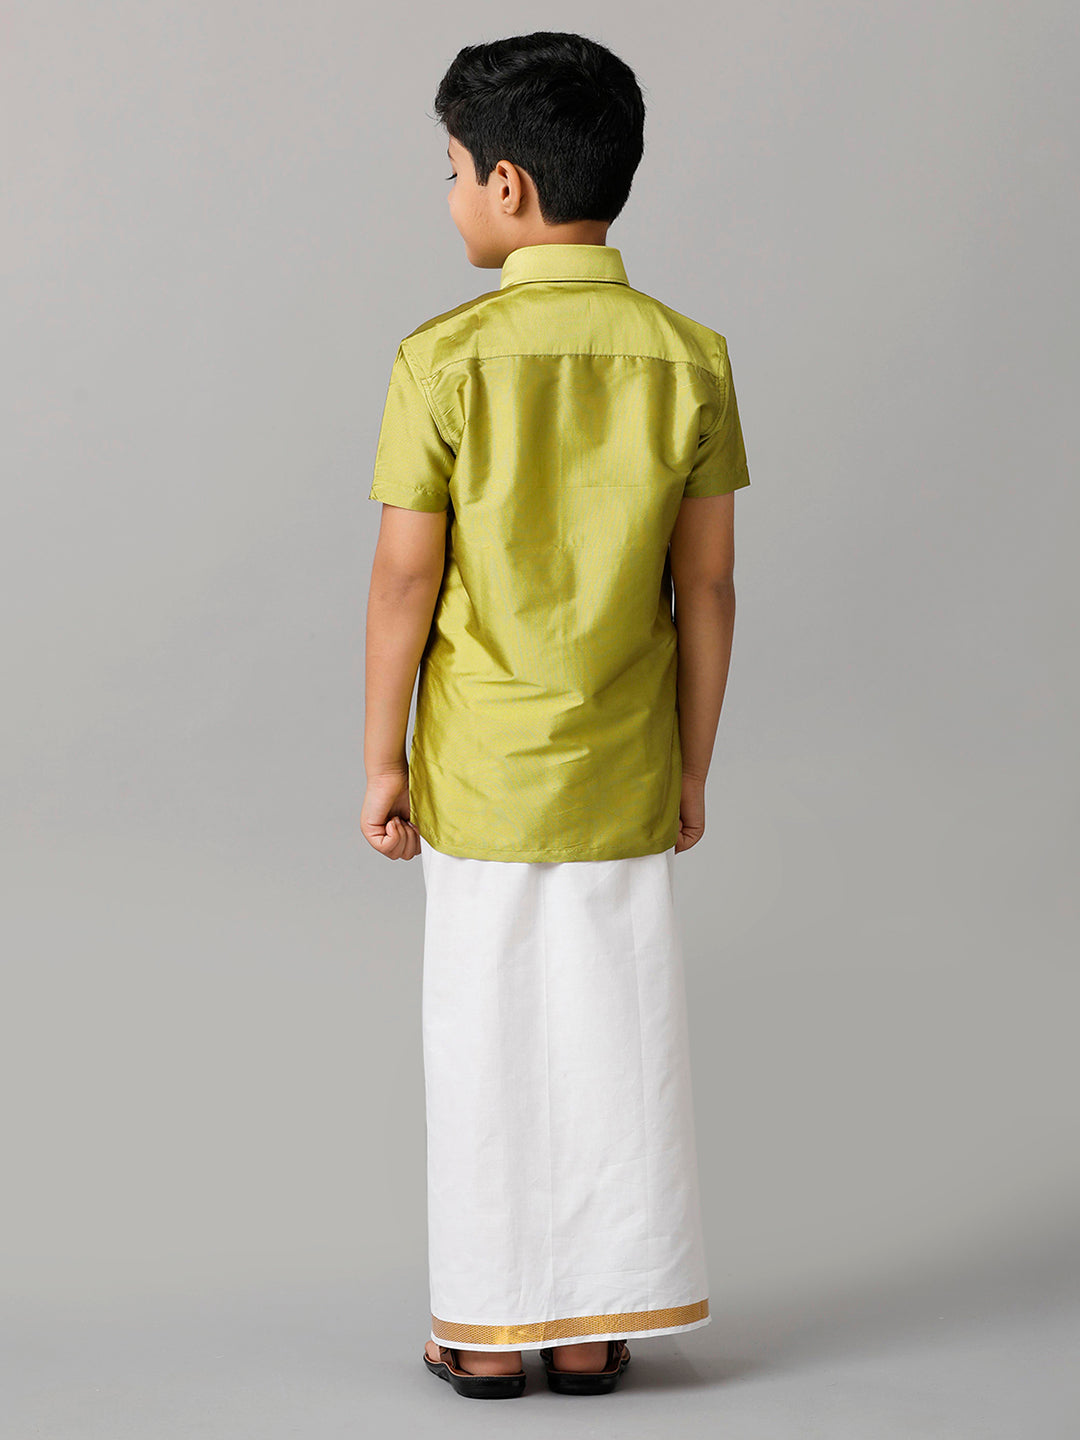 Boys Silk Cotton Lemon Green Half Sleeves Shirt with Adjustable White Dhoti Combo K44-Back  alternative view